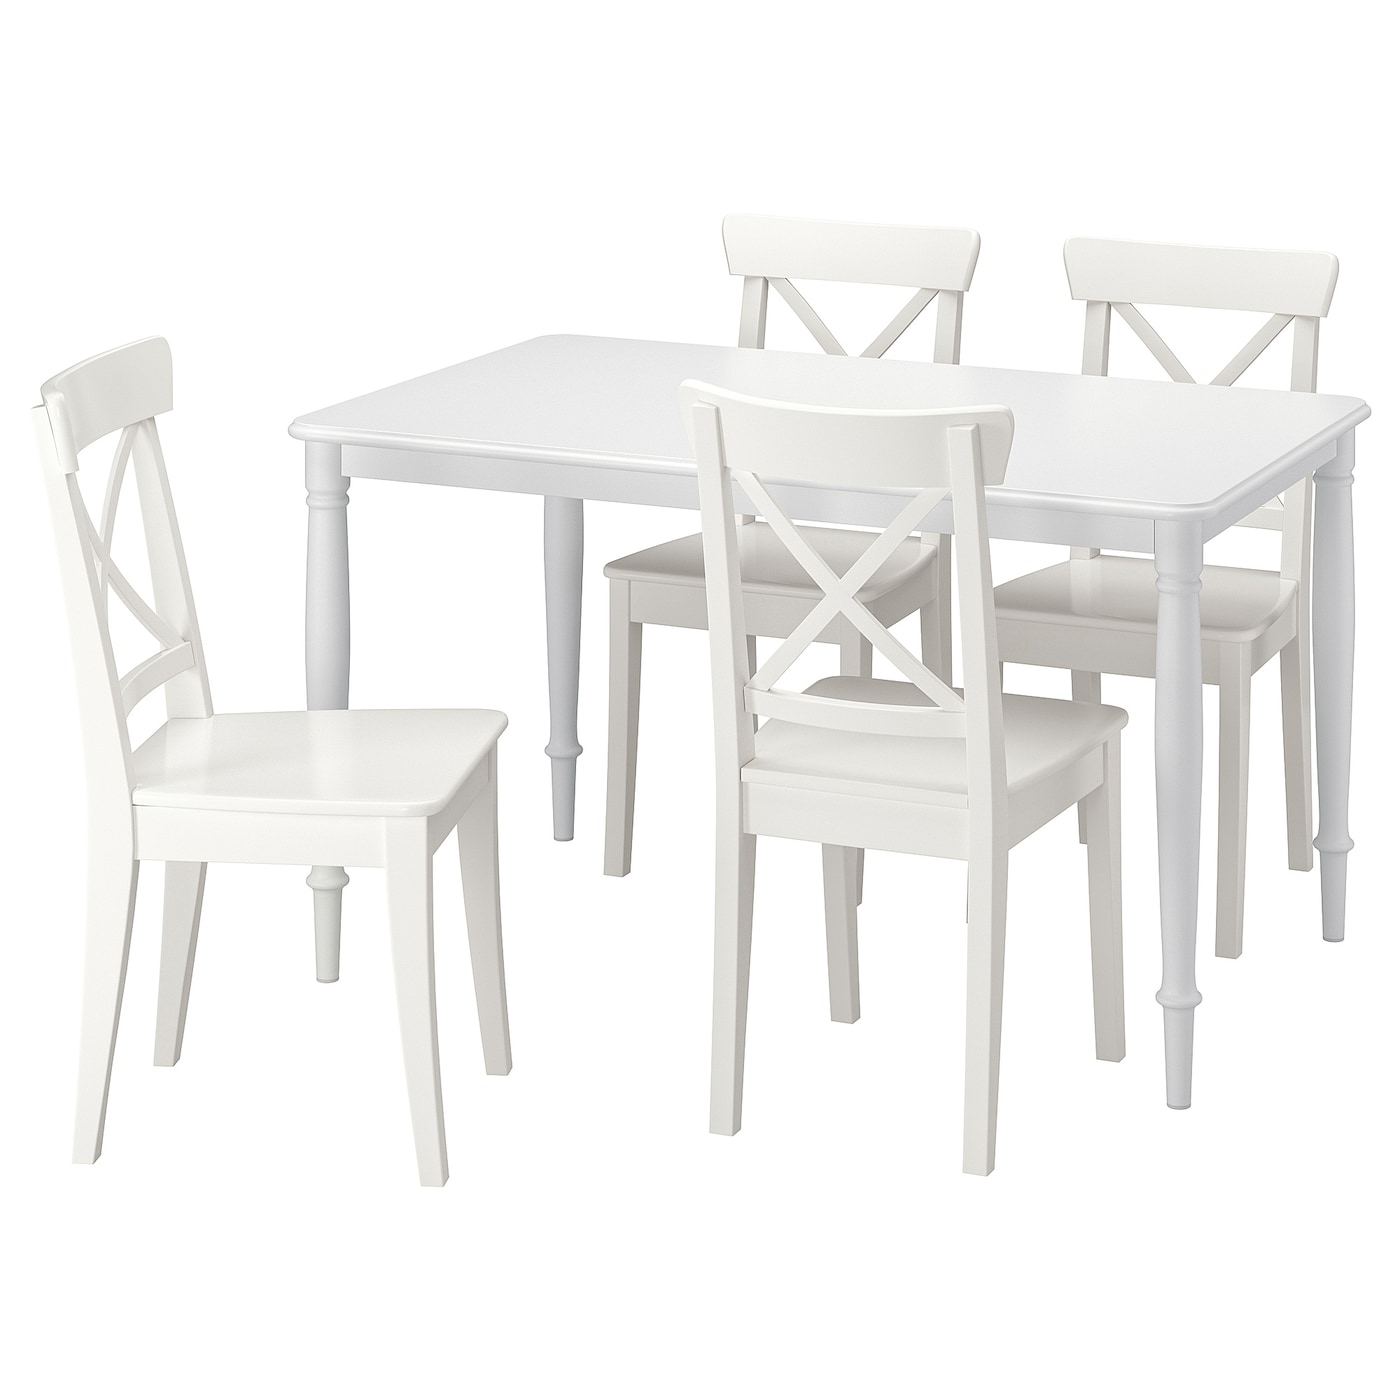 Стол и 4 стула - DANDERYD / INGOLF IKEA / ДАНДЕРИД/ ИНГОЛЬФ ИКЕА, 130х80х75  см,  белый